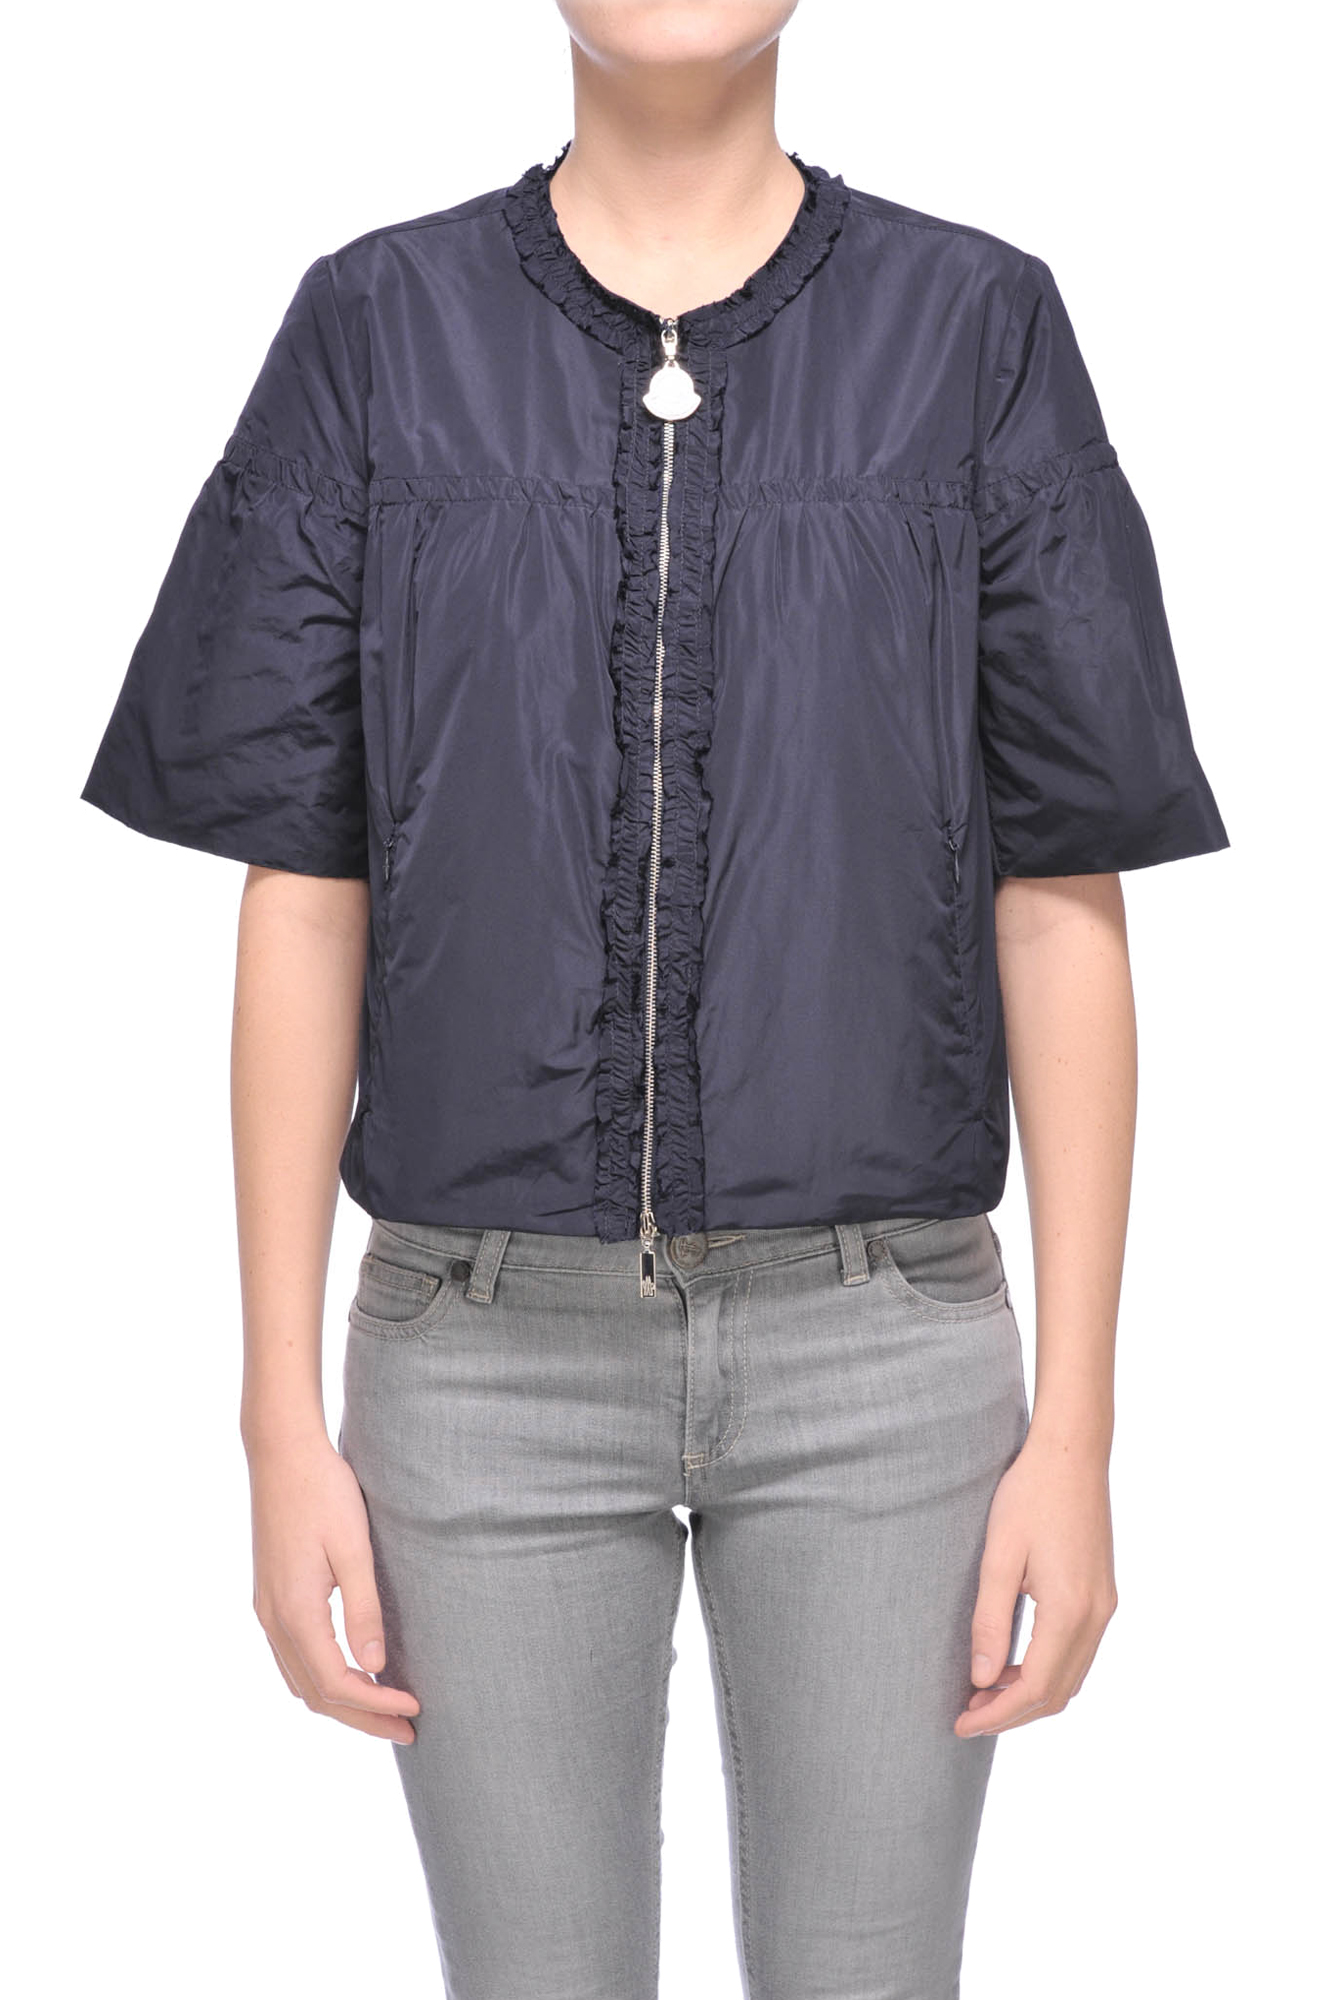 Moncler Orfea jacket - Buy online on Glamest Fashion Outlet - Glamest